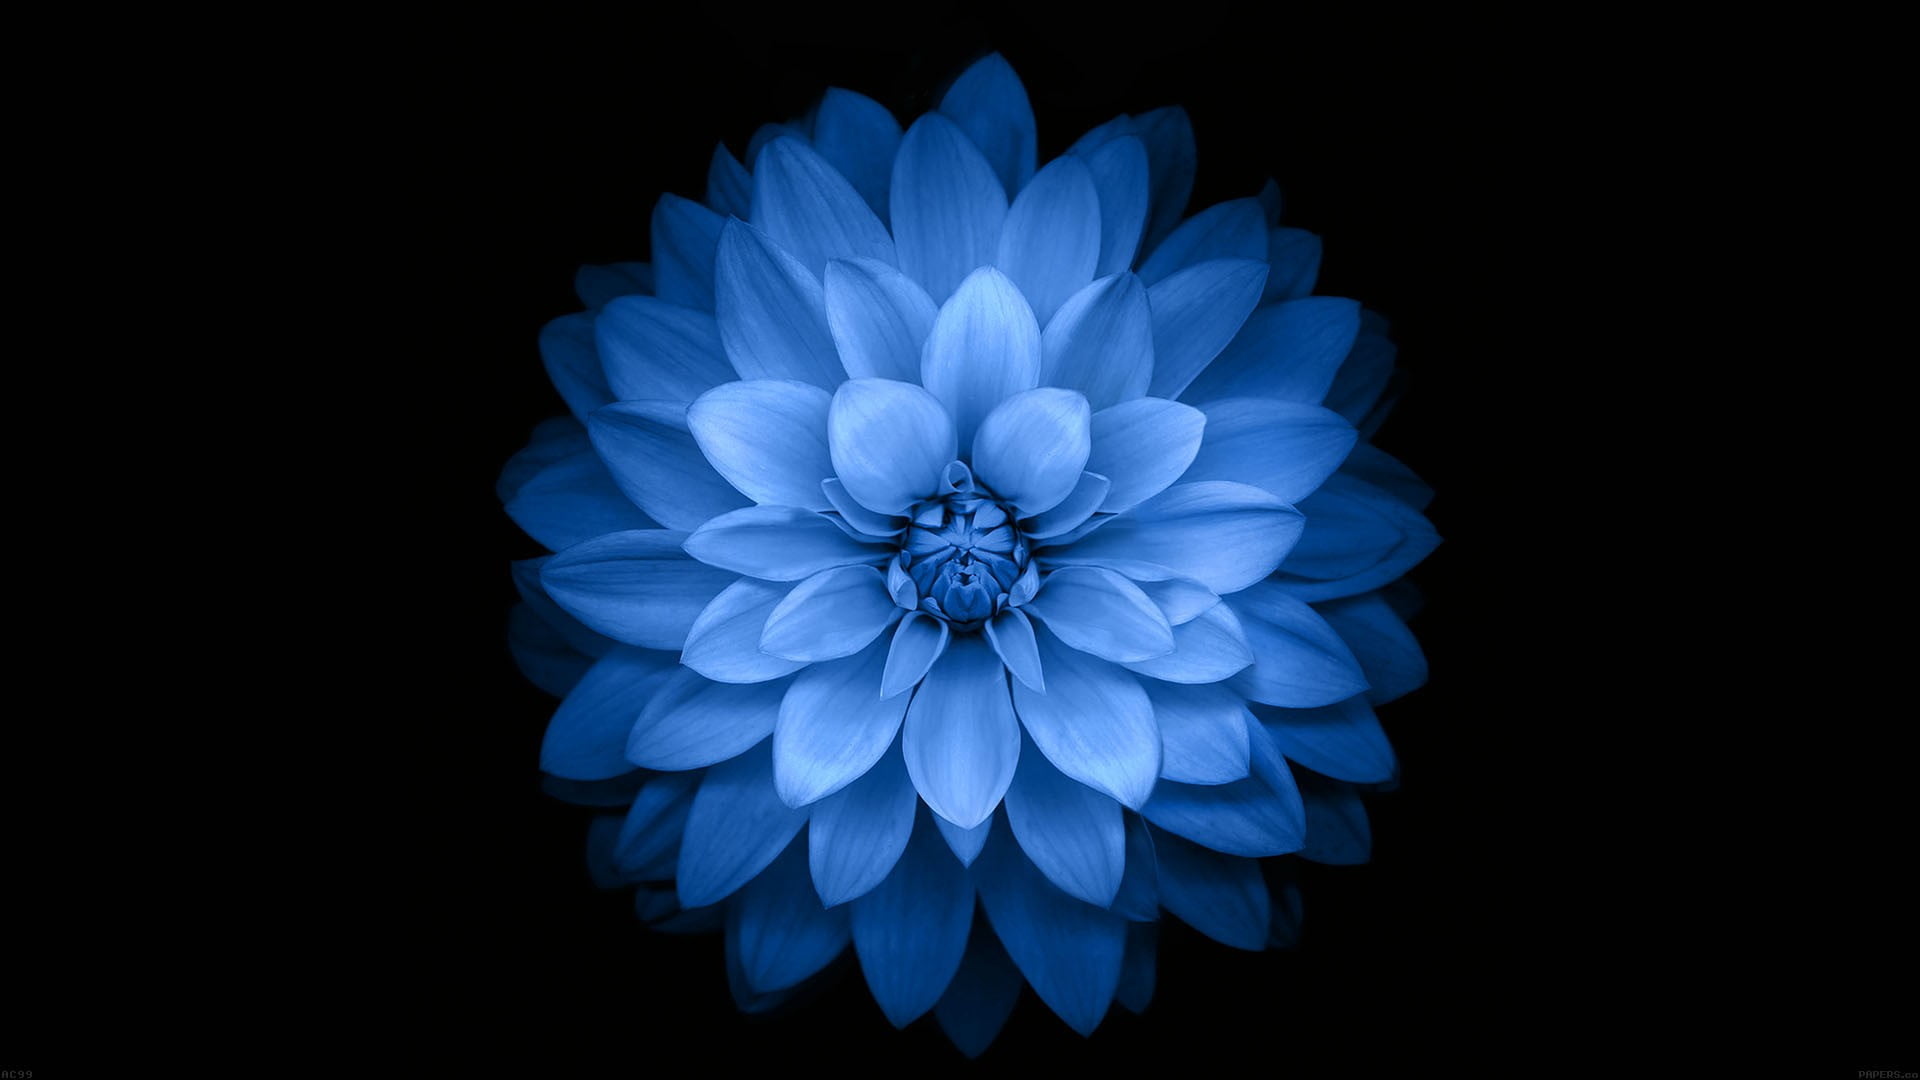 blue flower, flowers, black, simple background, nature, blue flowers